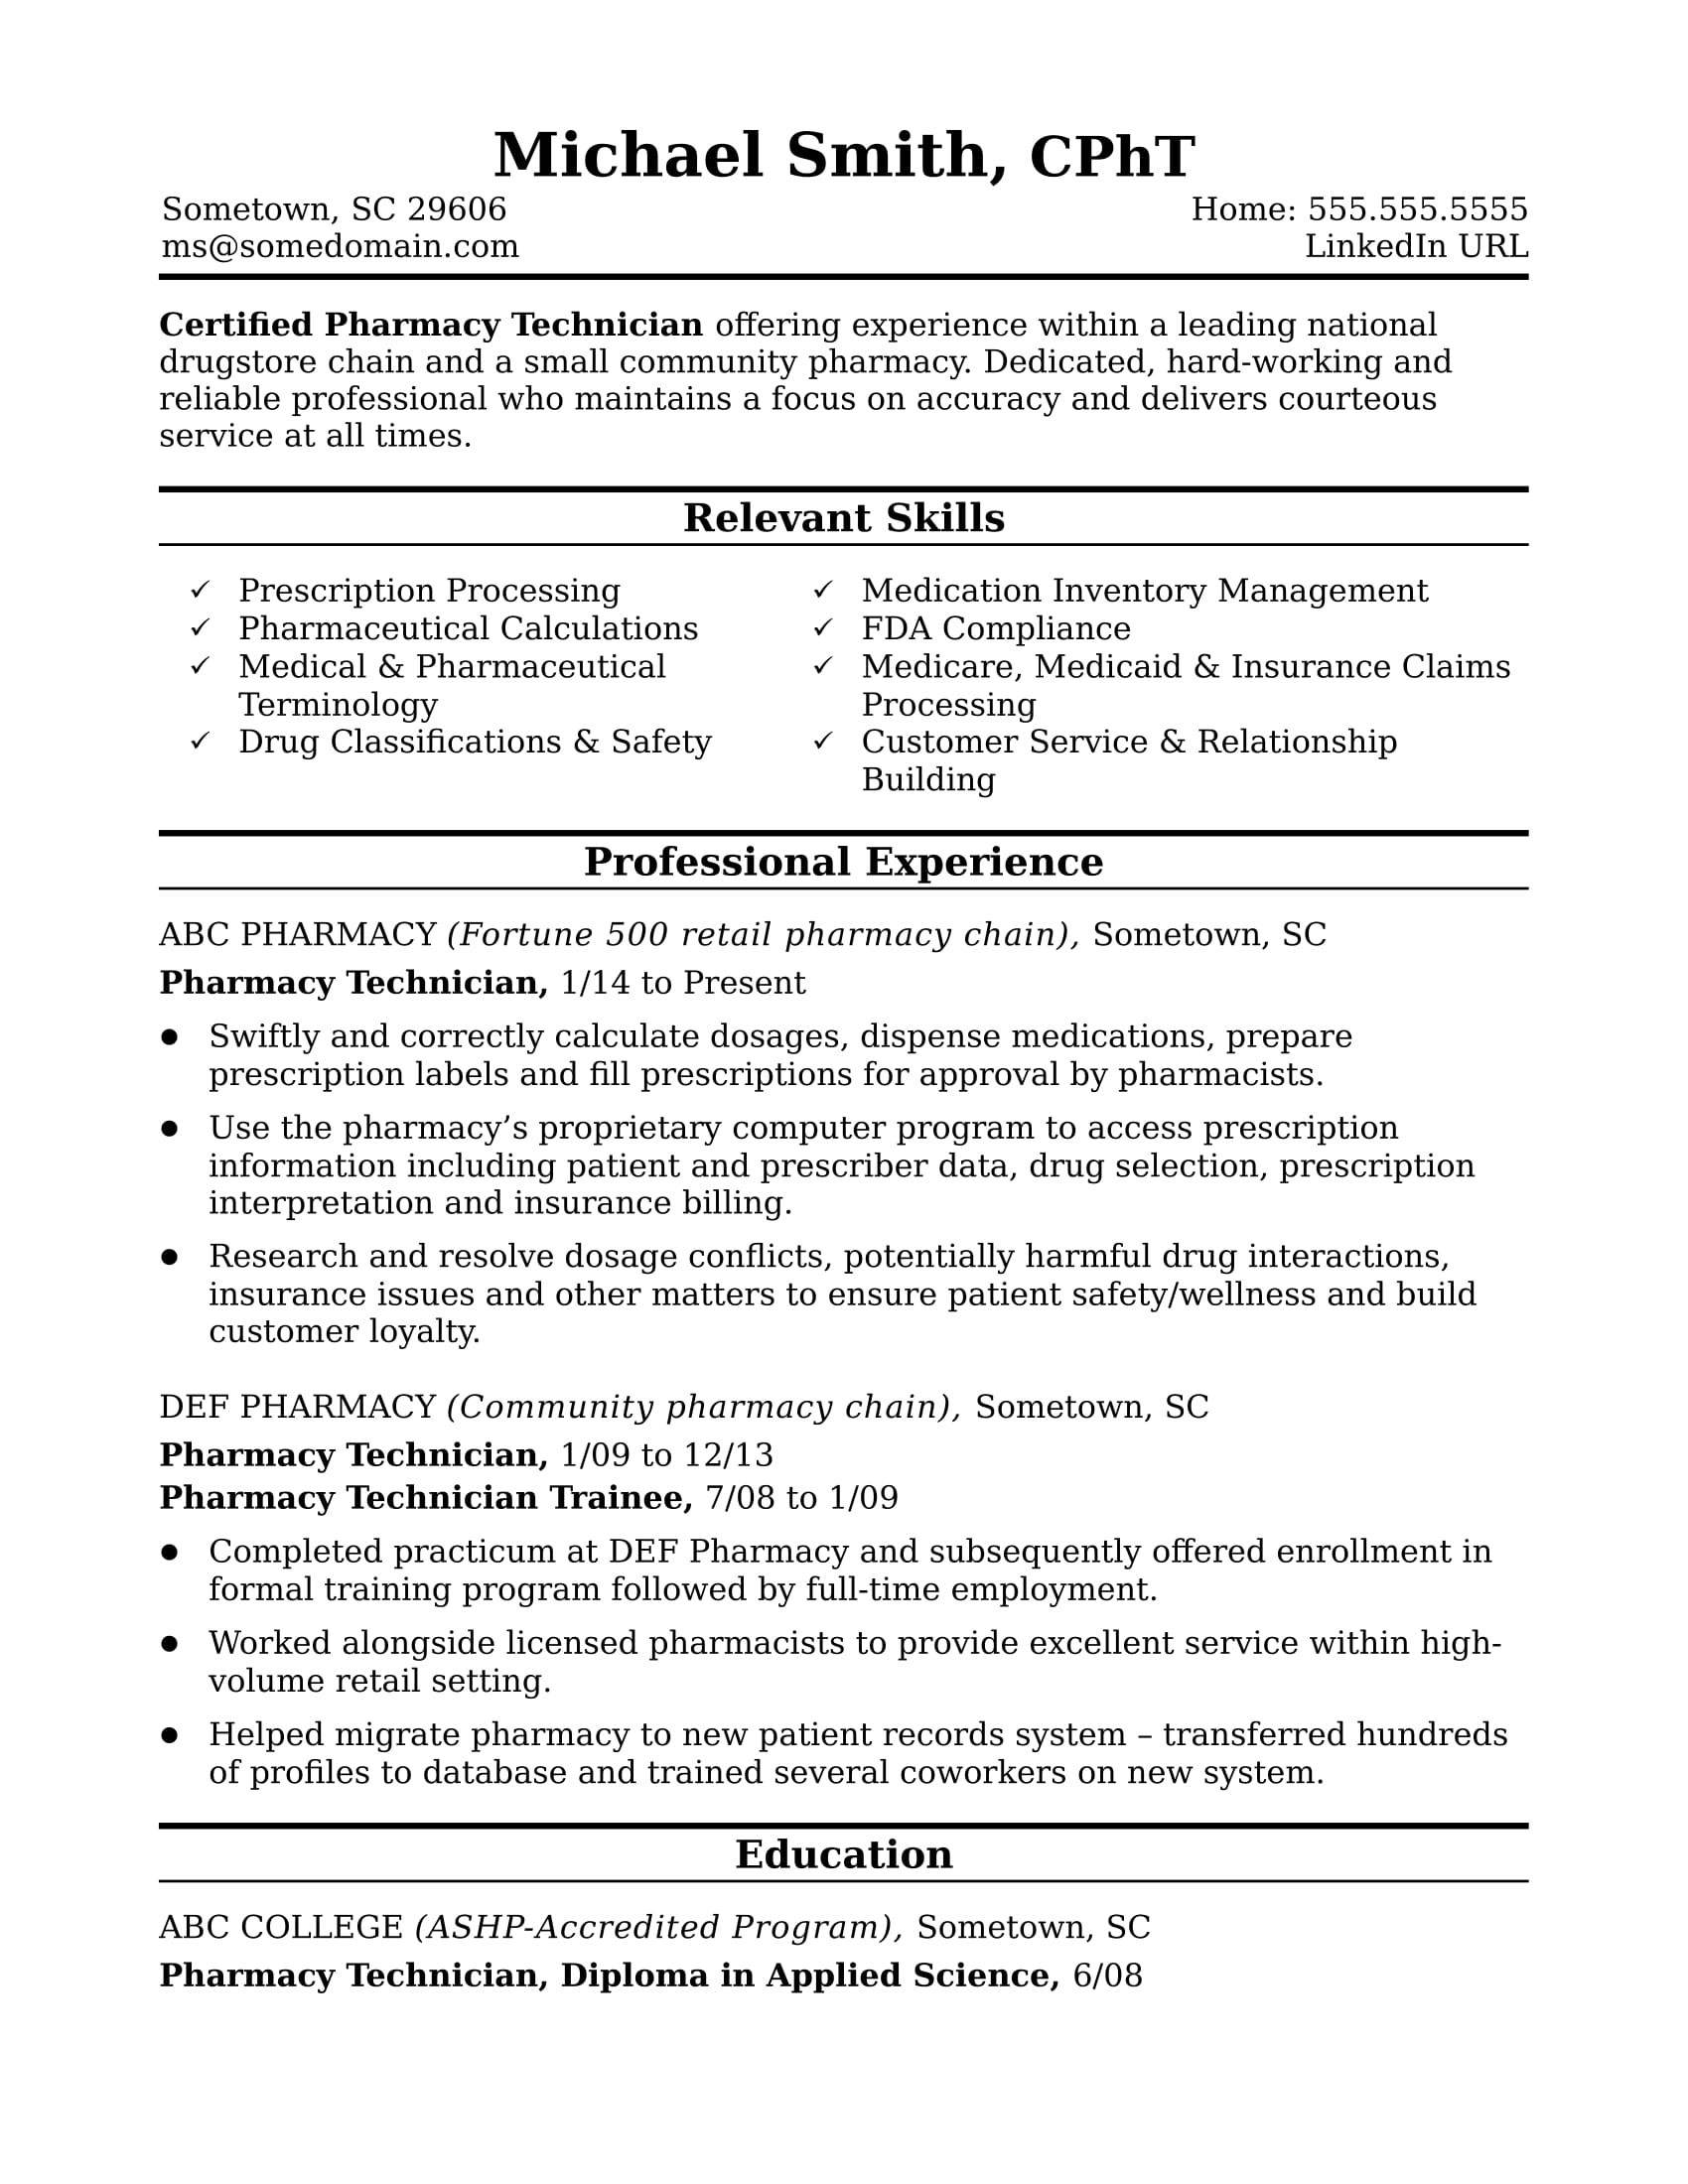 Sample Resume for Pharmacy Technician Trainee Midlevel Pharmacy Technician Resume Sample Monster.com